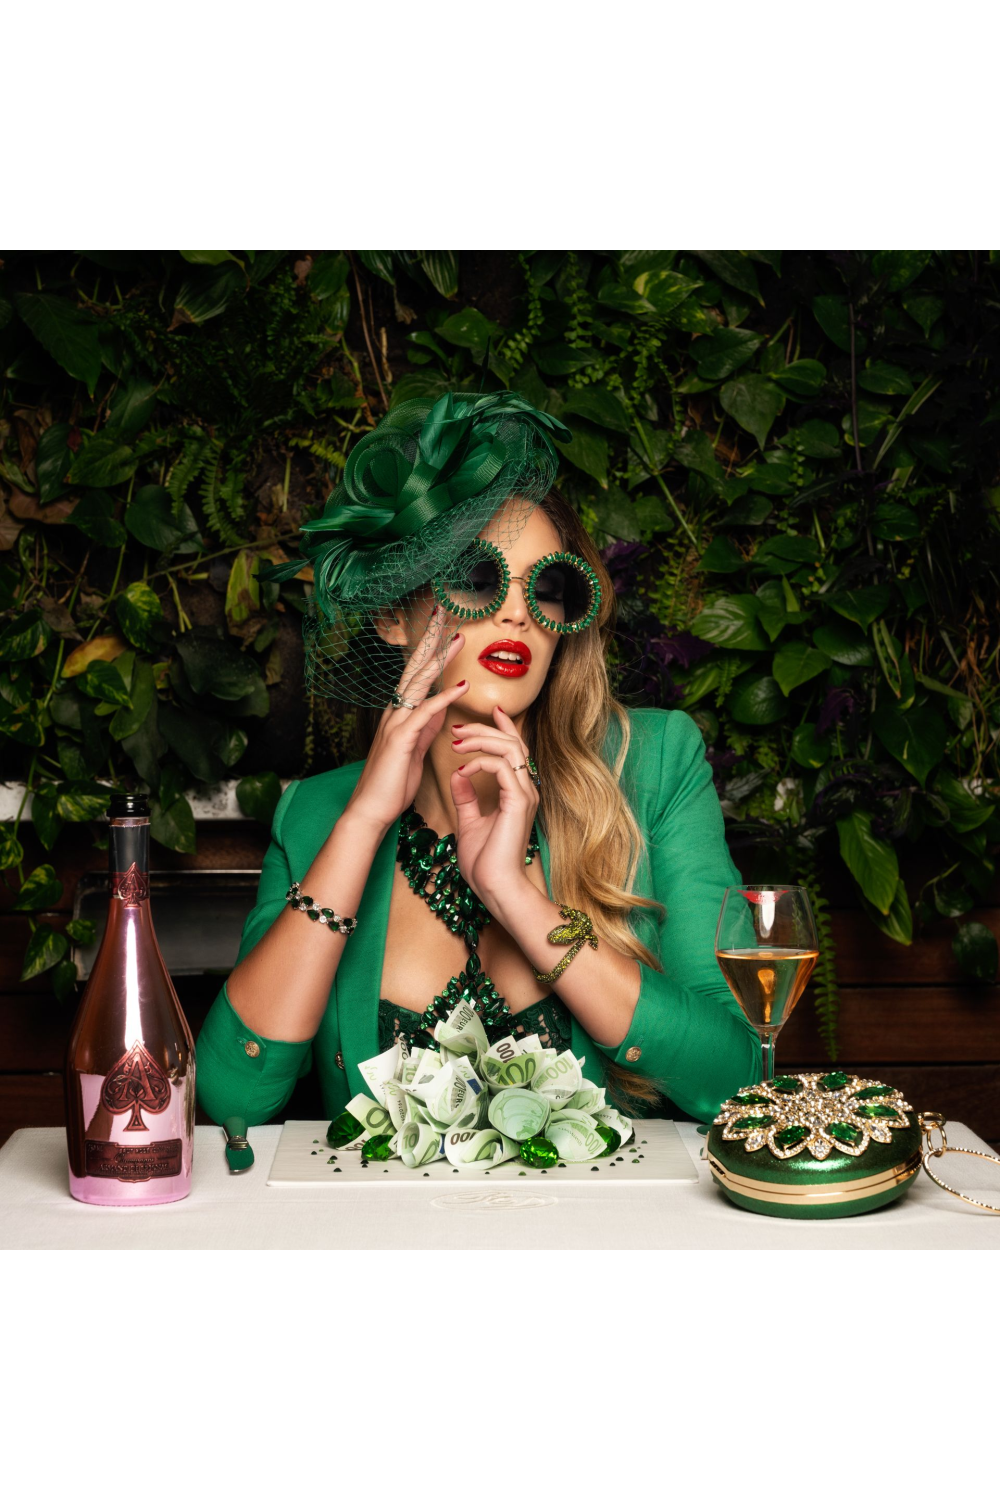 Fashionable Woman Photographic Art | Andrew Martin Green Salad | Oroa.com